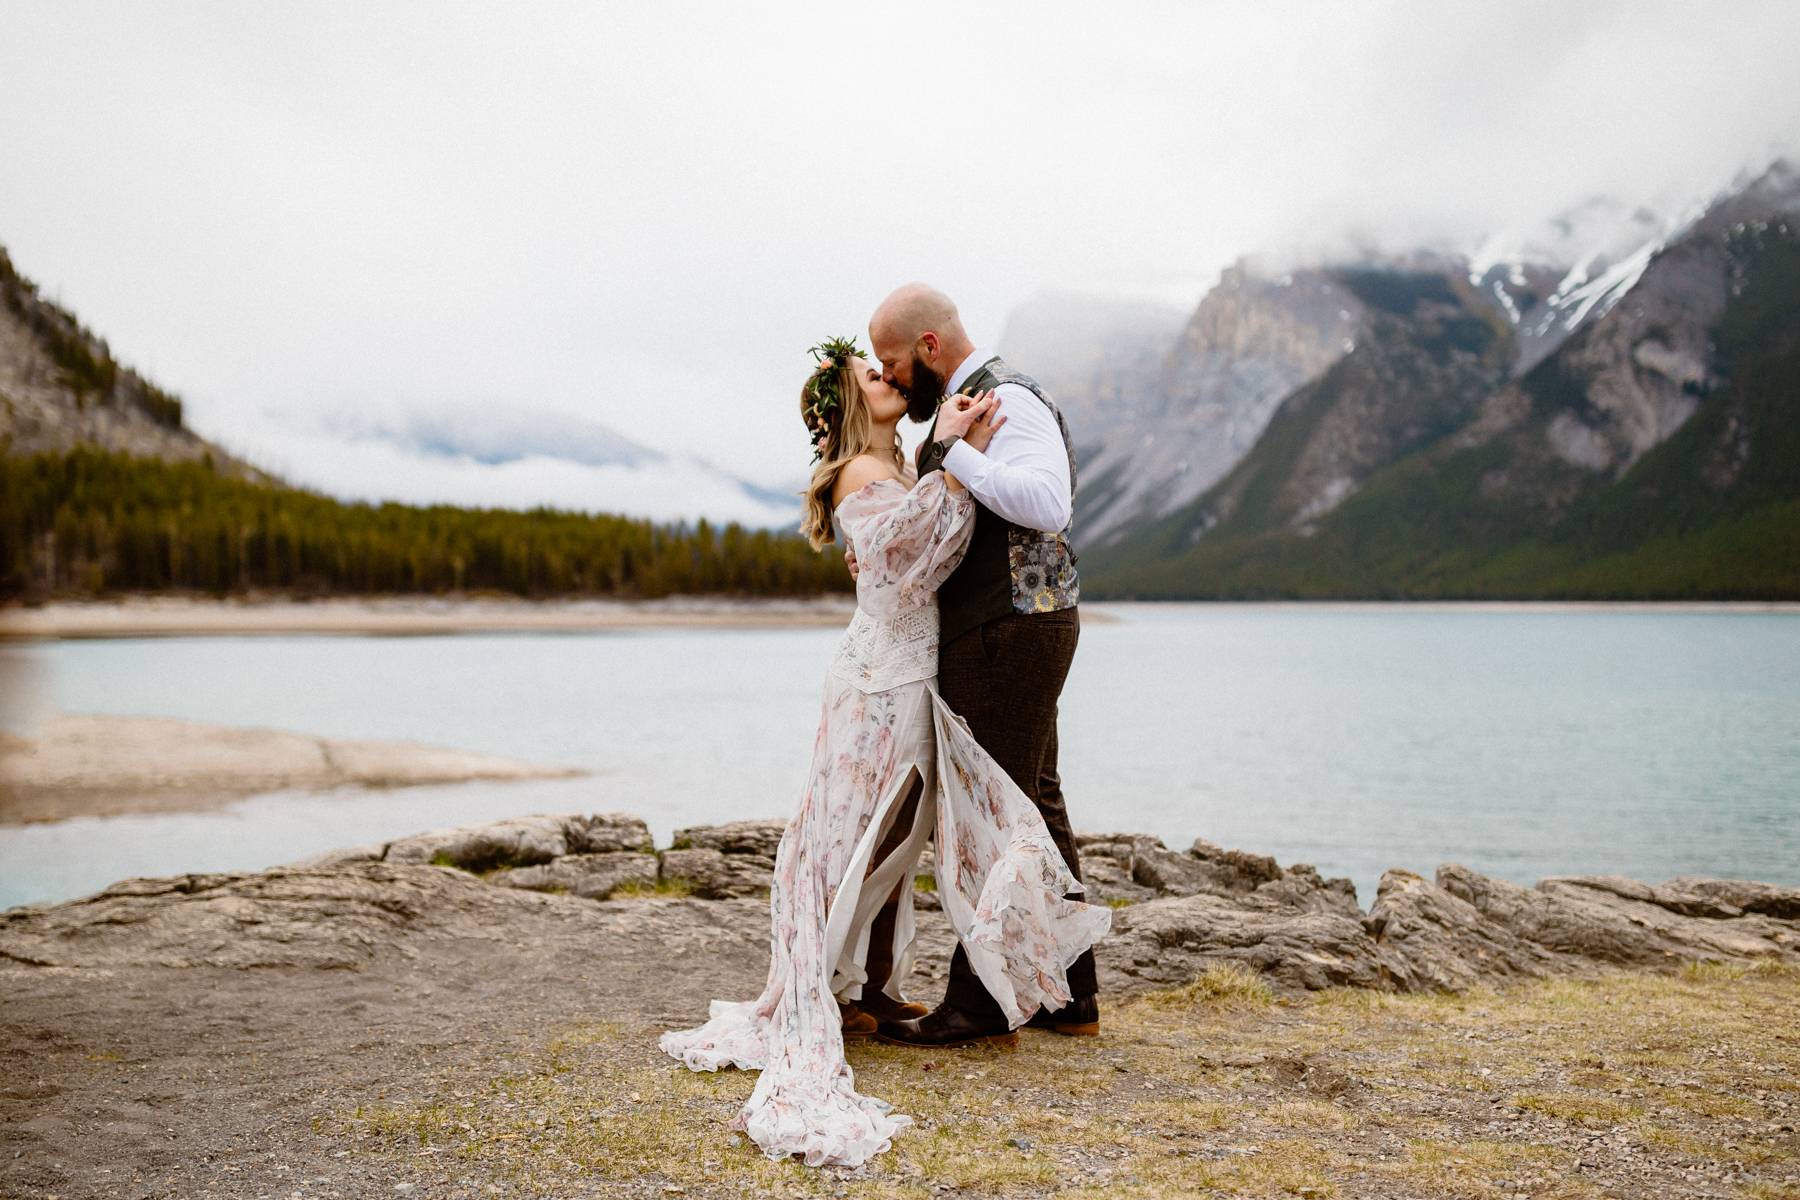 Stormy and Rainy Banff Wedding Photography - Photo 19